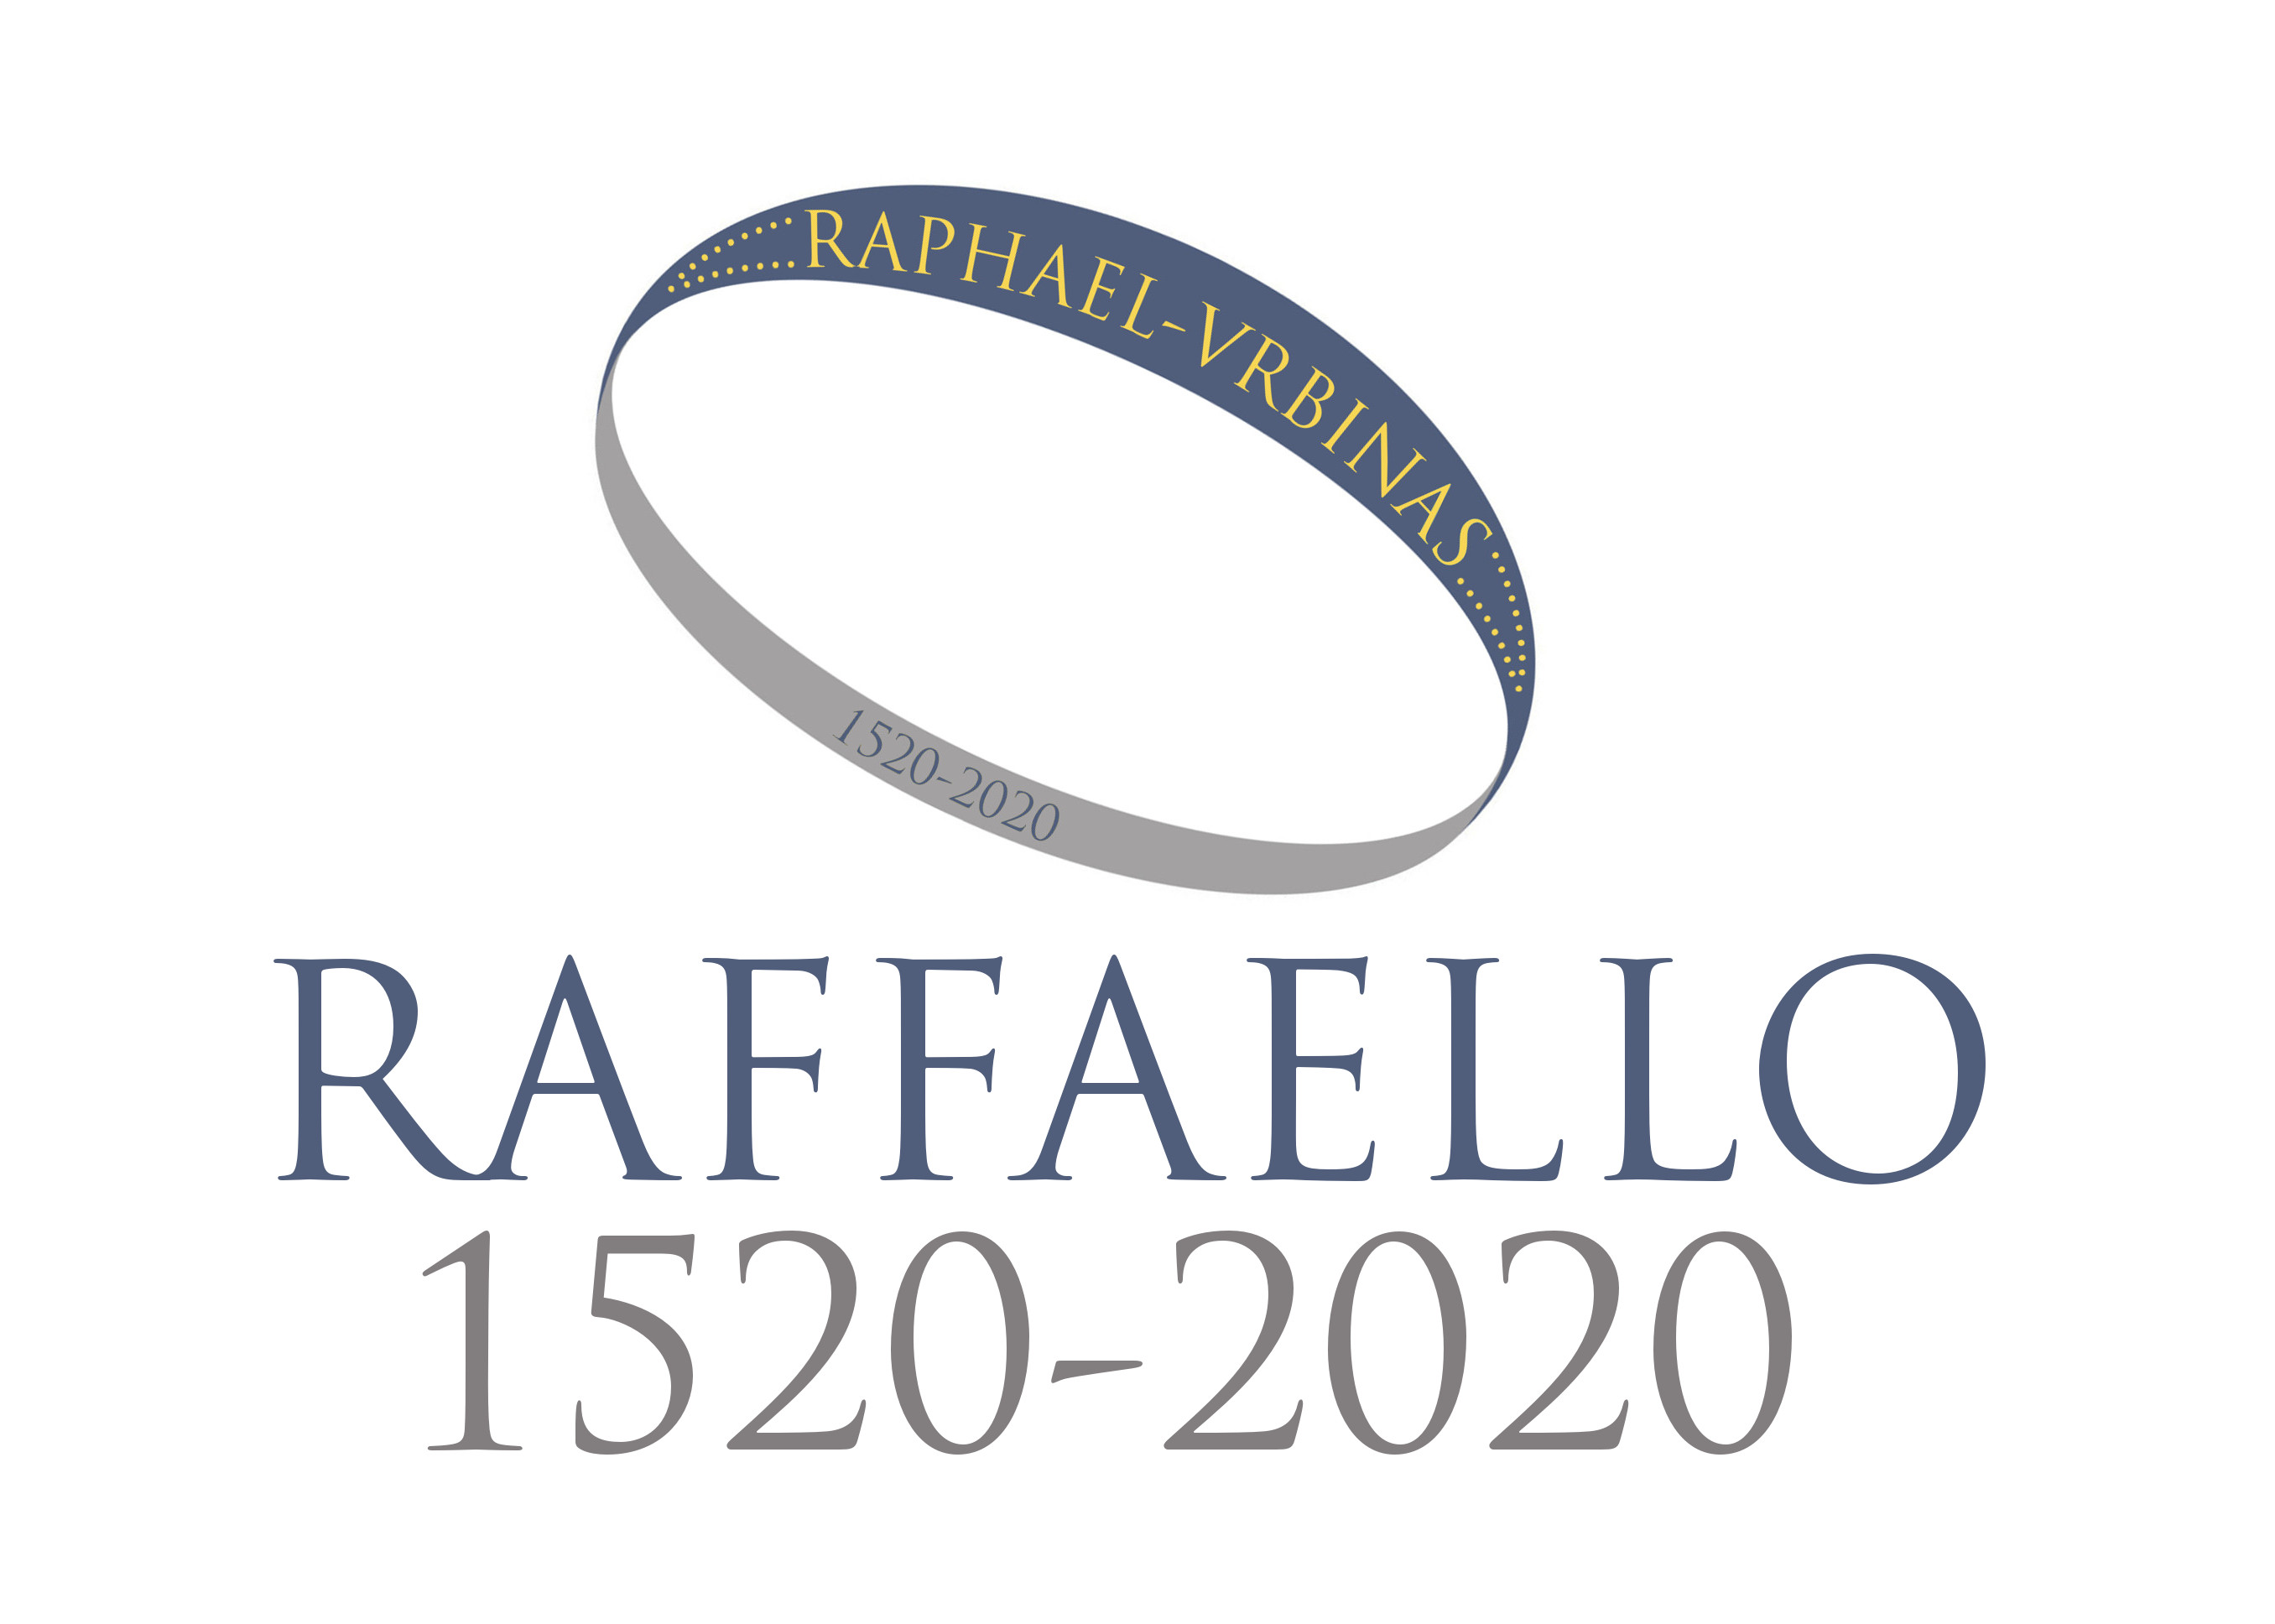 Raffaello logo 2020